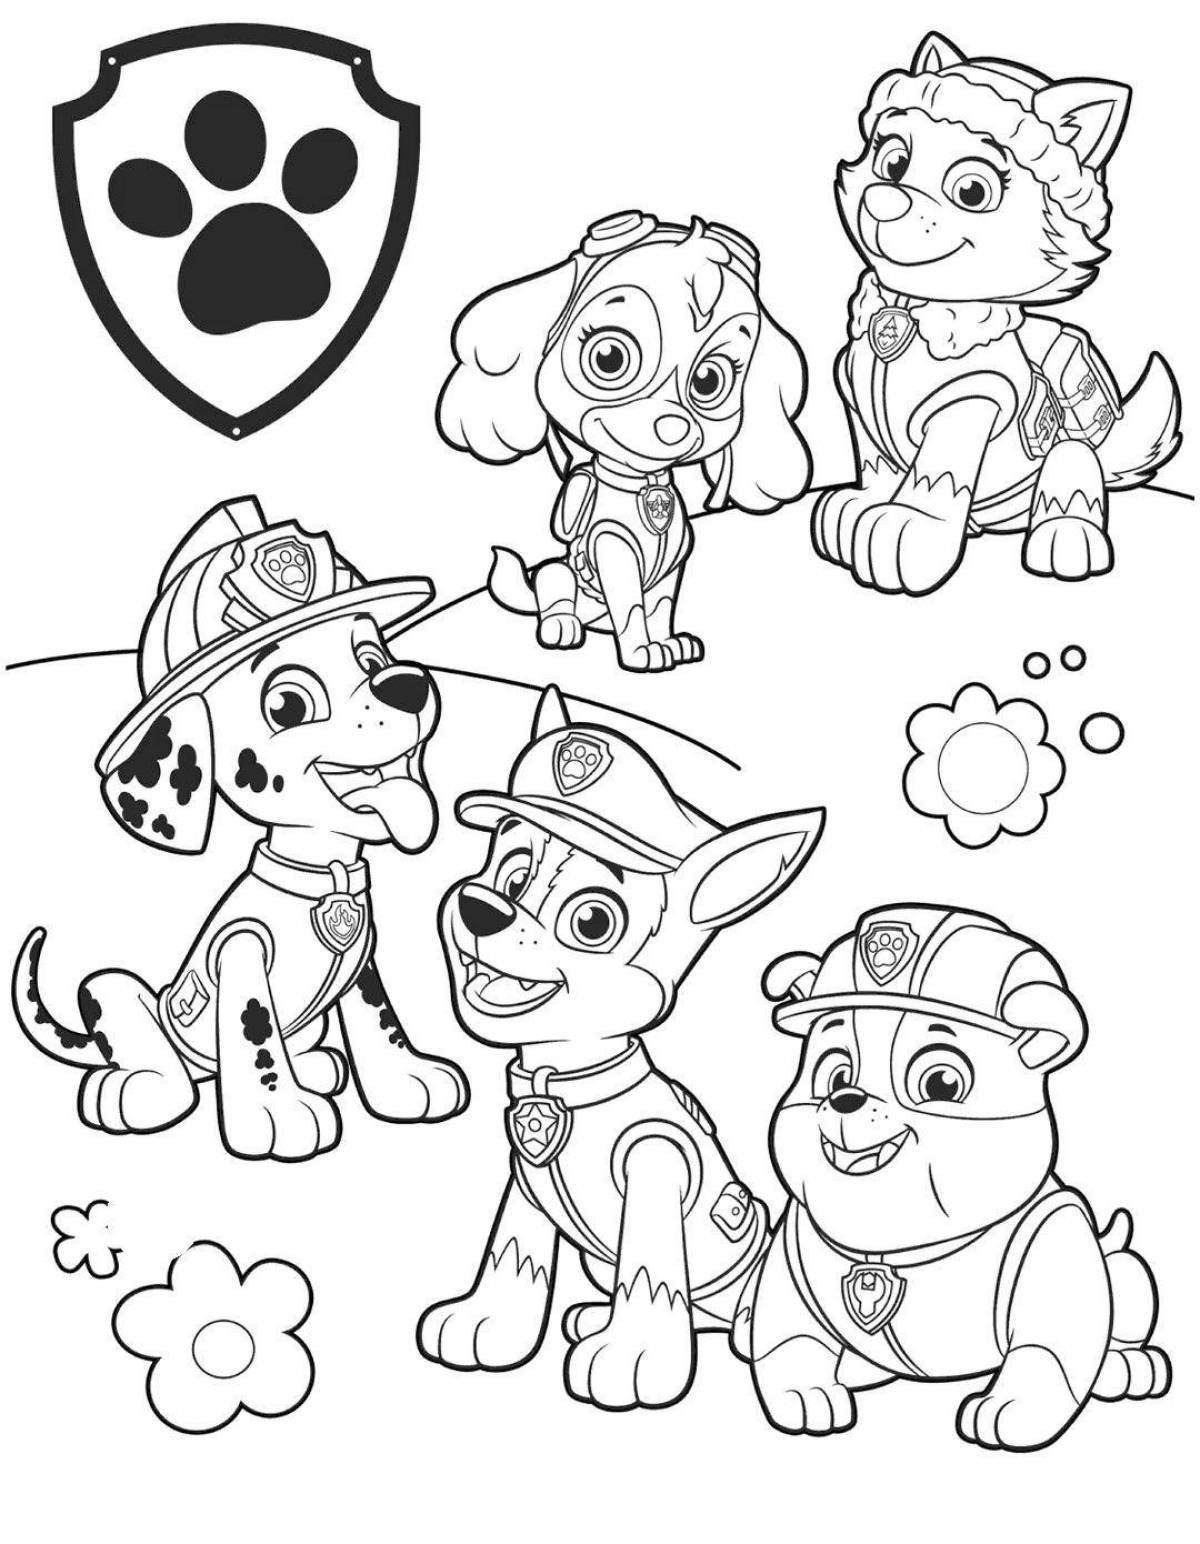 Jolly patrol coloring page